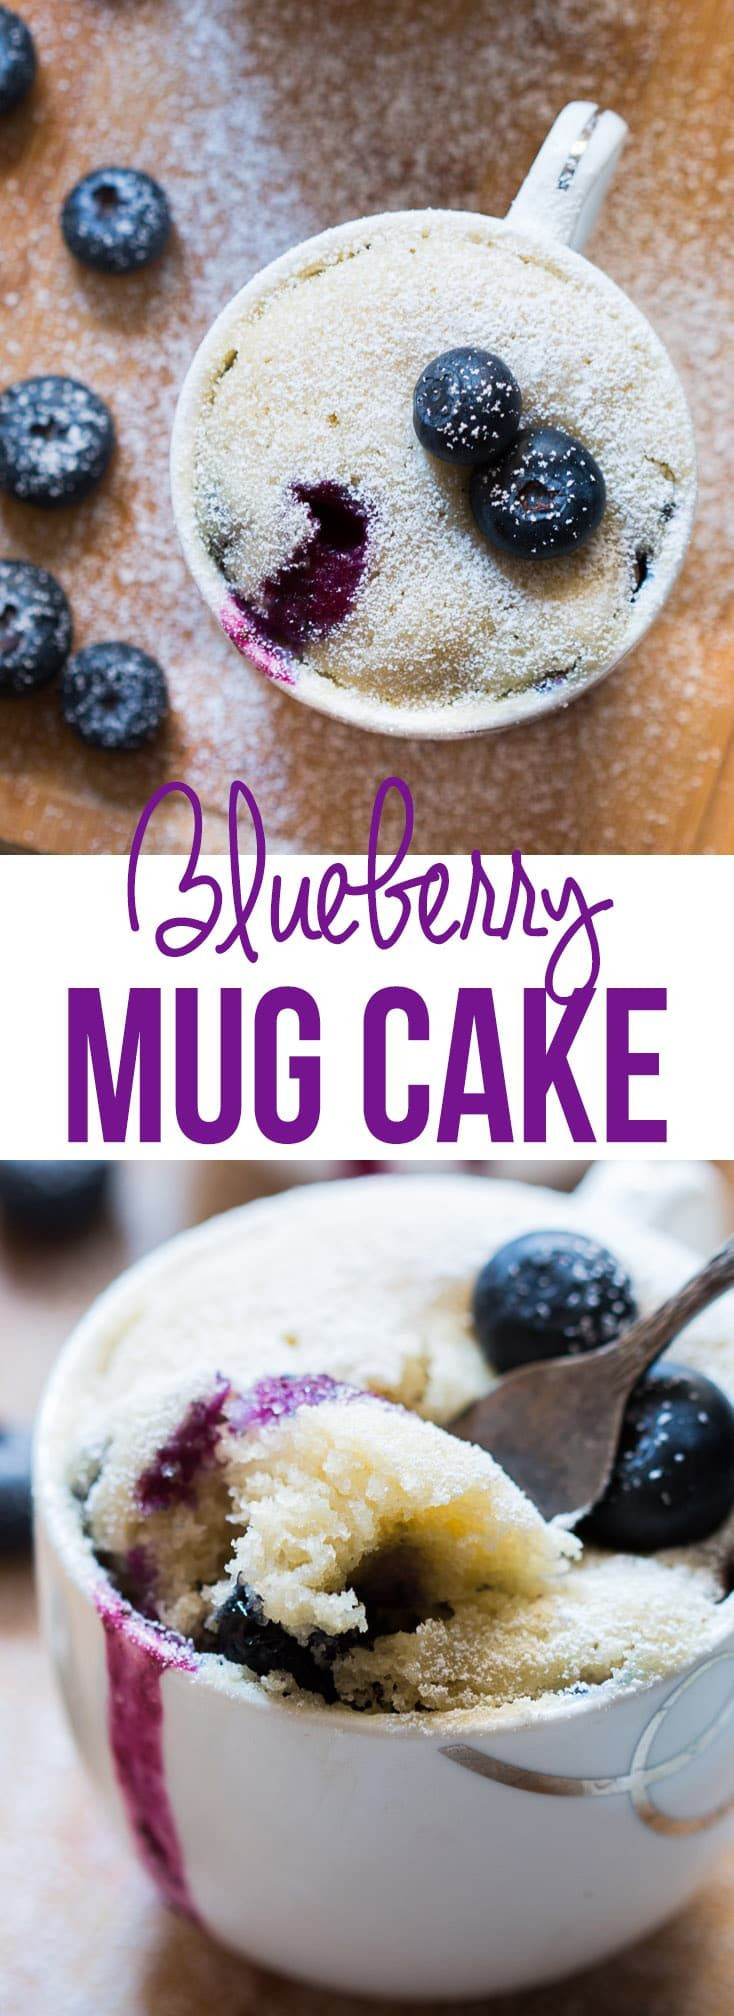 Mug Cake With Cake Mix And No Egg
 Eggless Blueberry Microwave Mug Cake Recipe